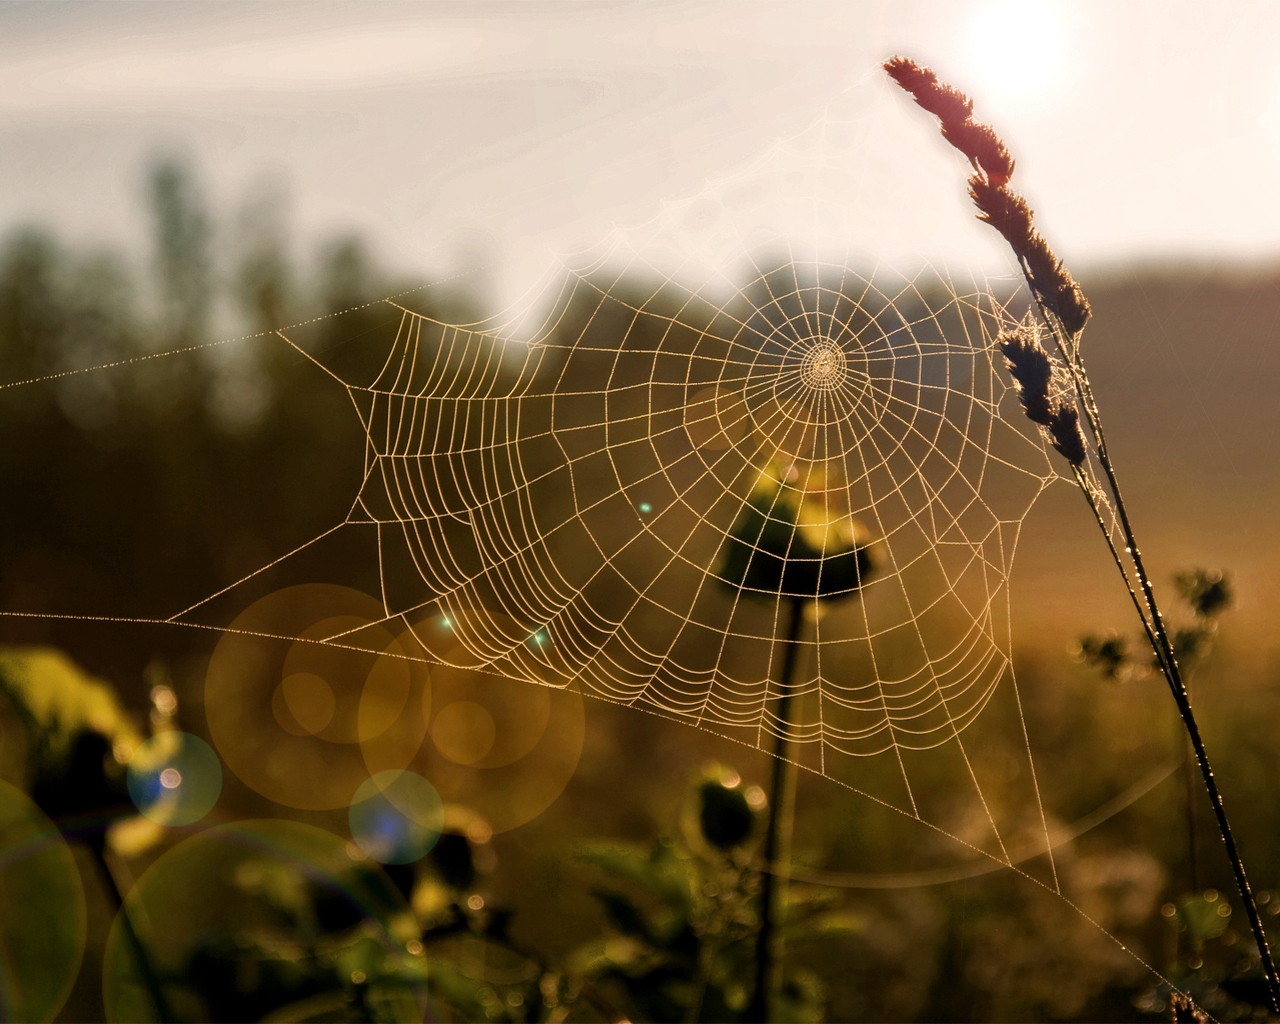 Image: Nature, field, grass, web